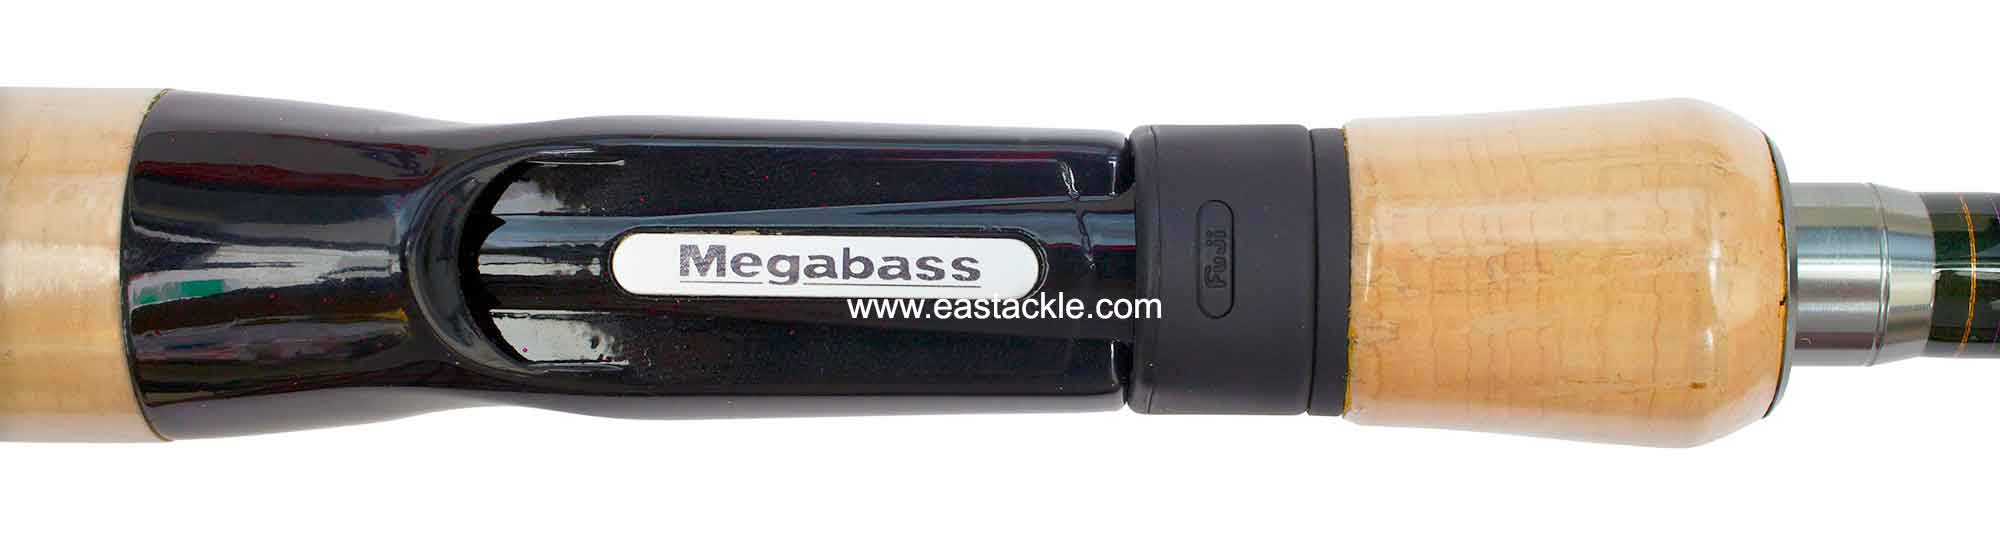 Megabass - Orochi XX - F6-70XX - TOUR VERSATILE - Bait Casting Rod - Reel Seat (Top View)